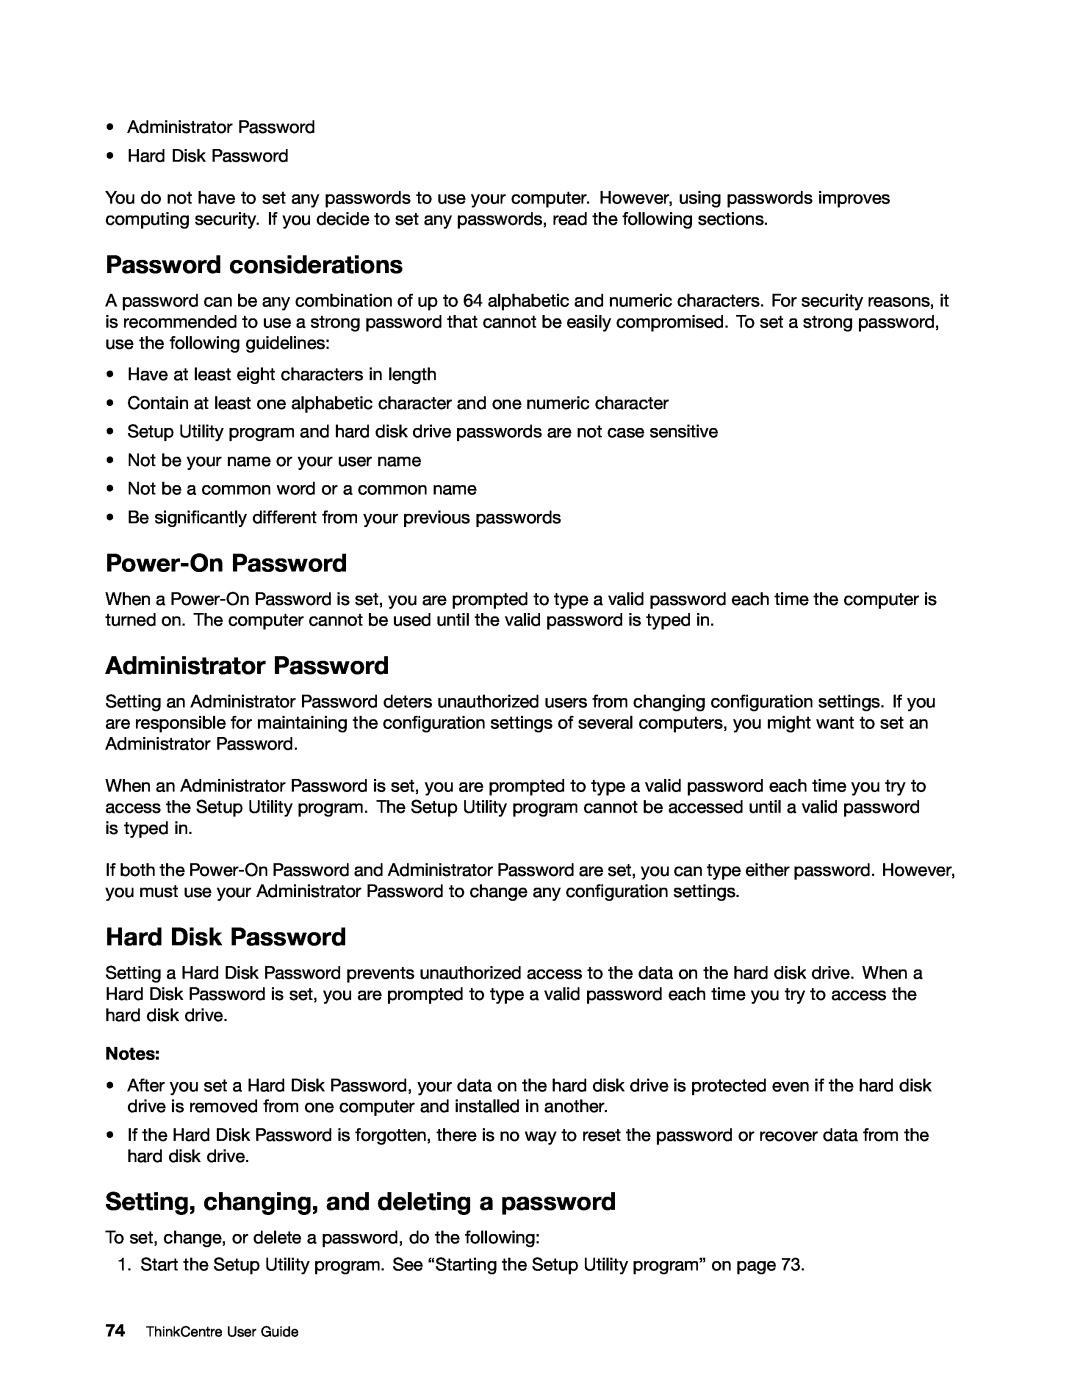 Lenovo 3484JMU manual Password considerations, Power-On Password, Administrator Password, Hard Disk Password 